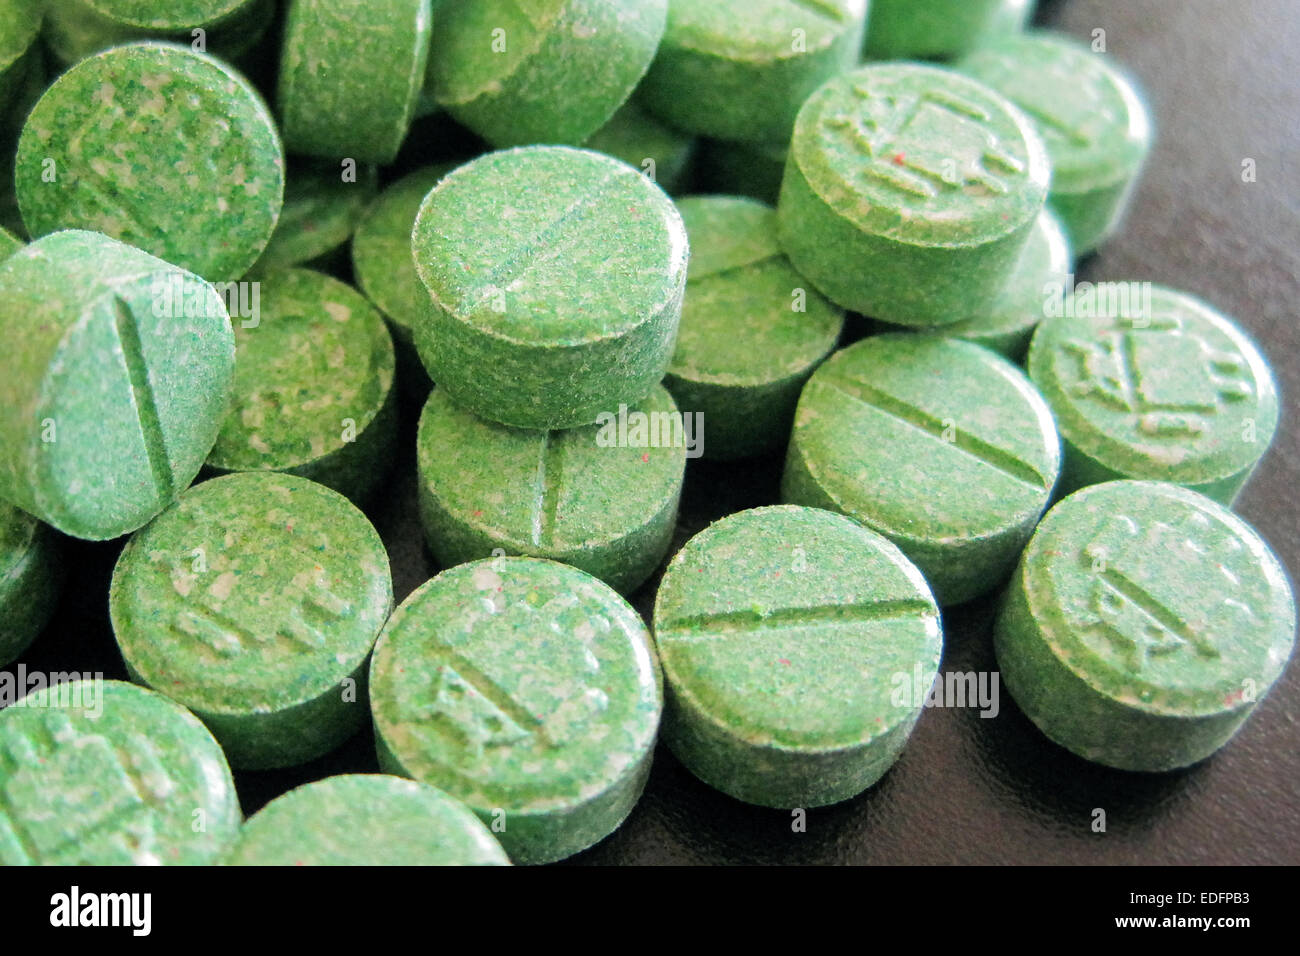 'Green Android' Ecstasy pills containing between 150-200mg of MDMA (3,4-methylenedioxy-N-methylamphetamine). Stock Photo